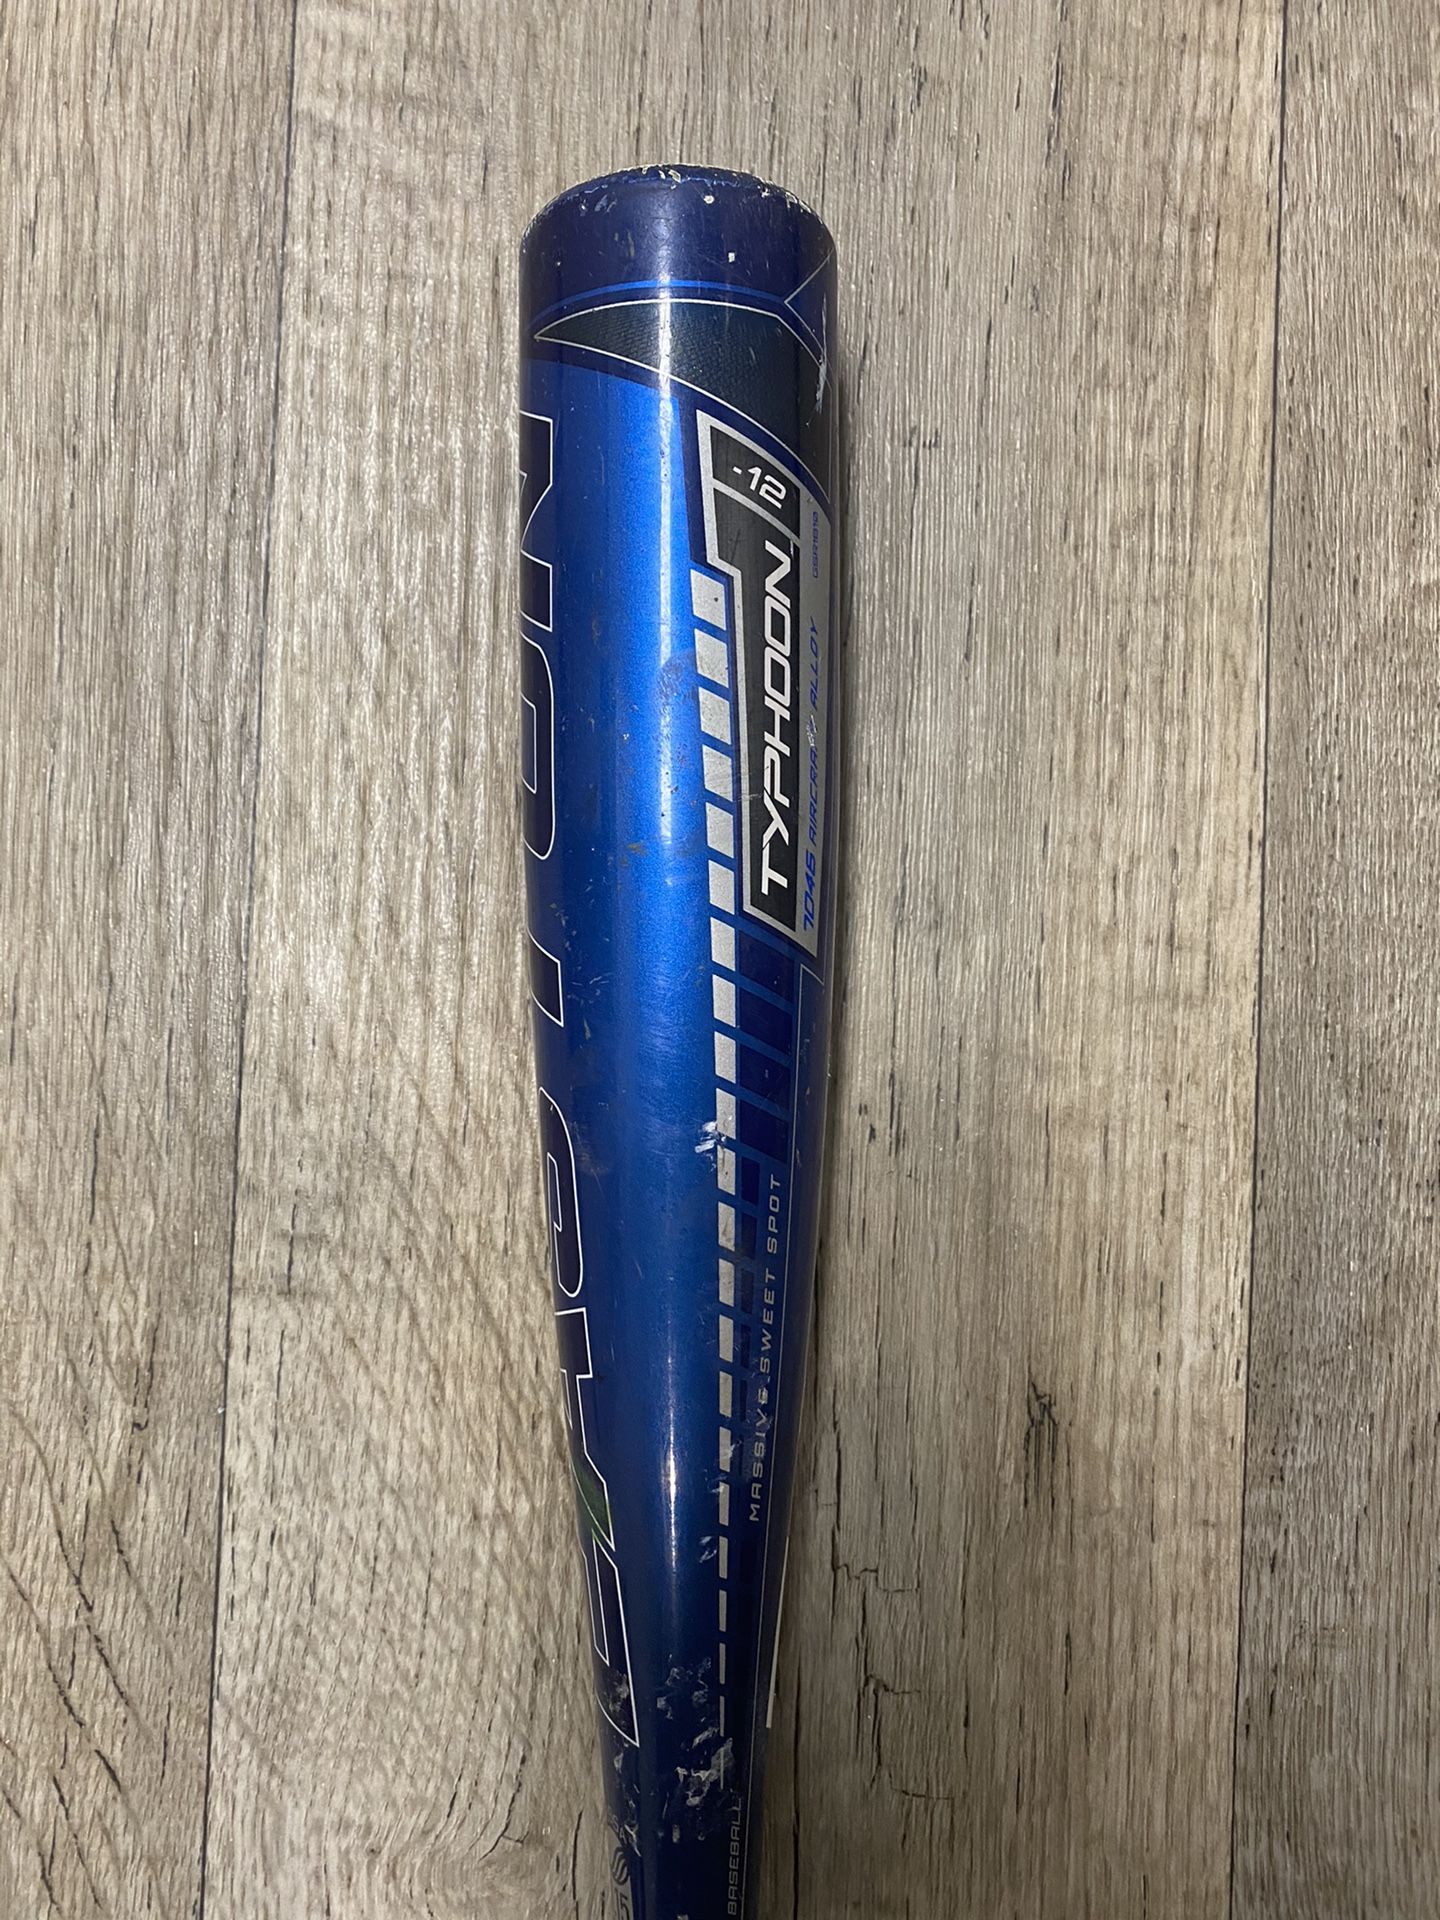 Easton Typhoon YB13TY baseball bat 27” 15oz 2 1/4 barrel -12